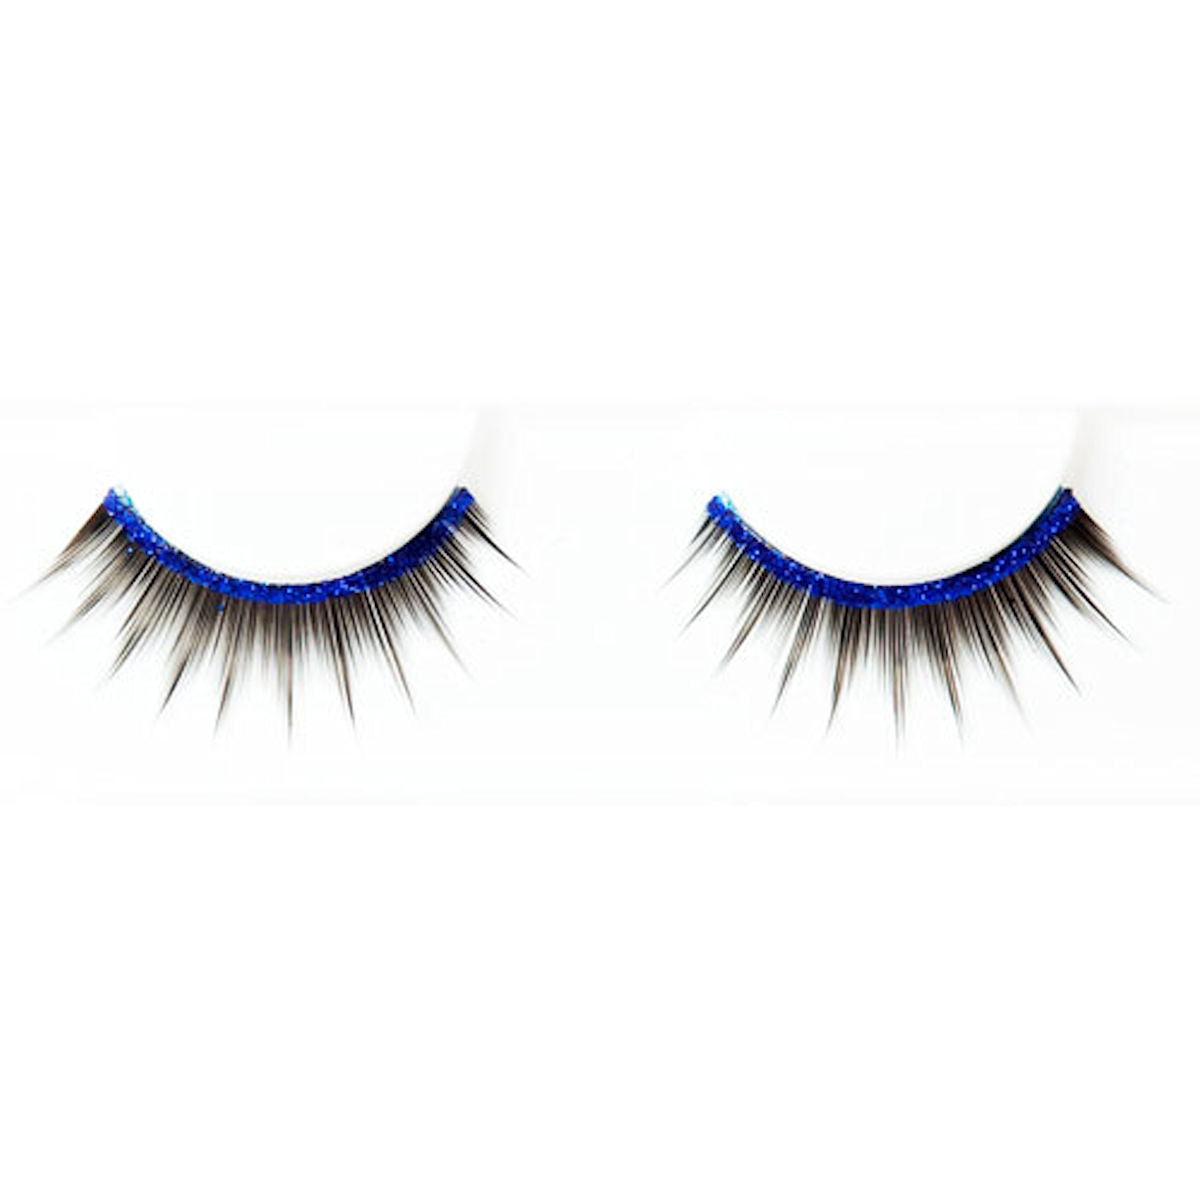 Black Deluxe False Eyelashes with Blue Glitter Trim